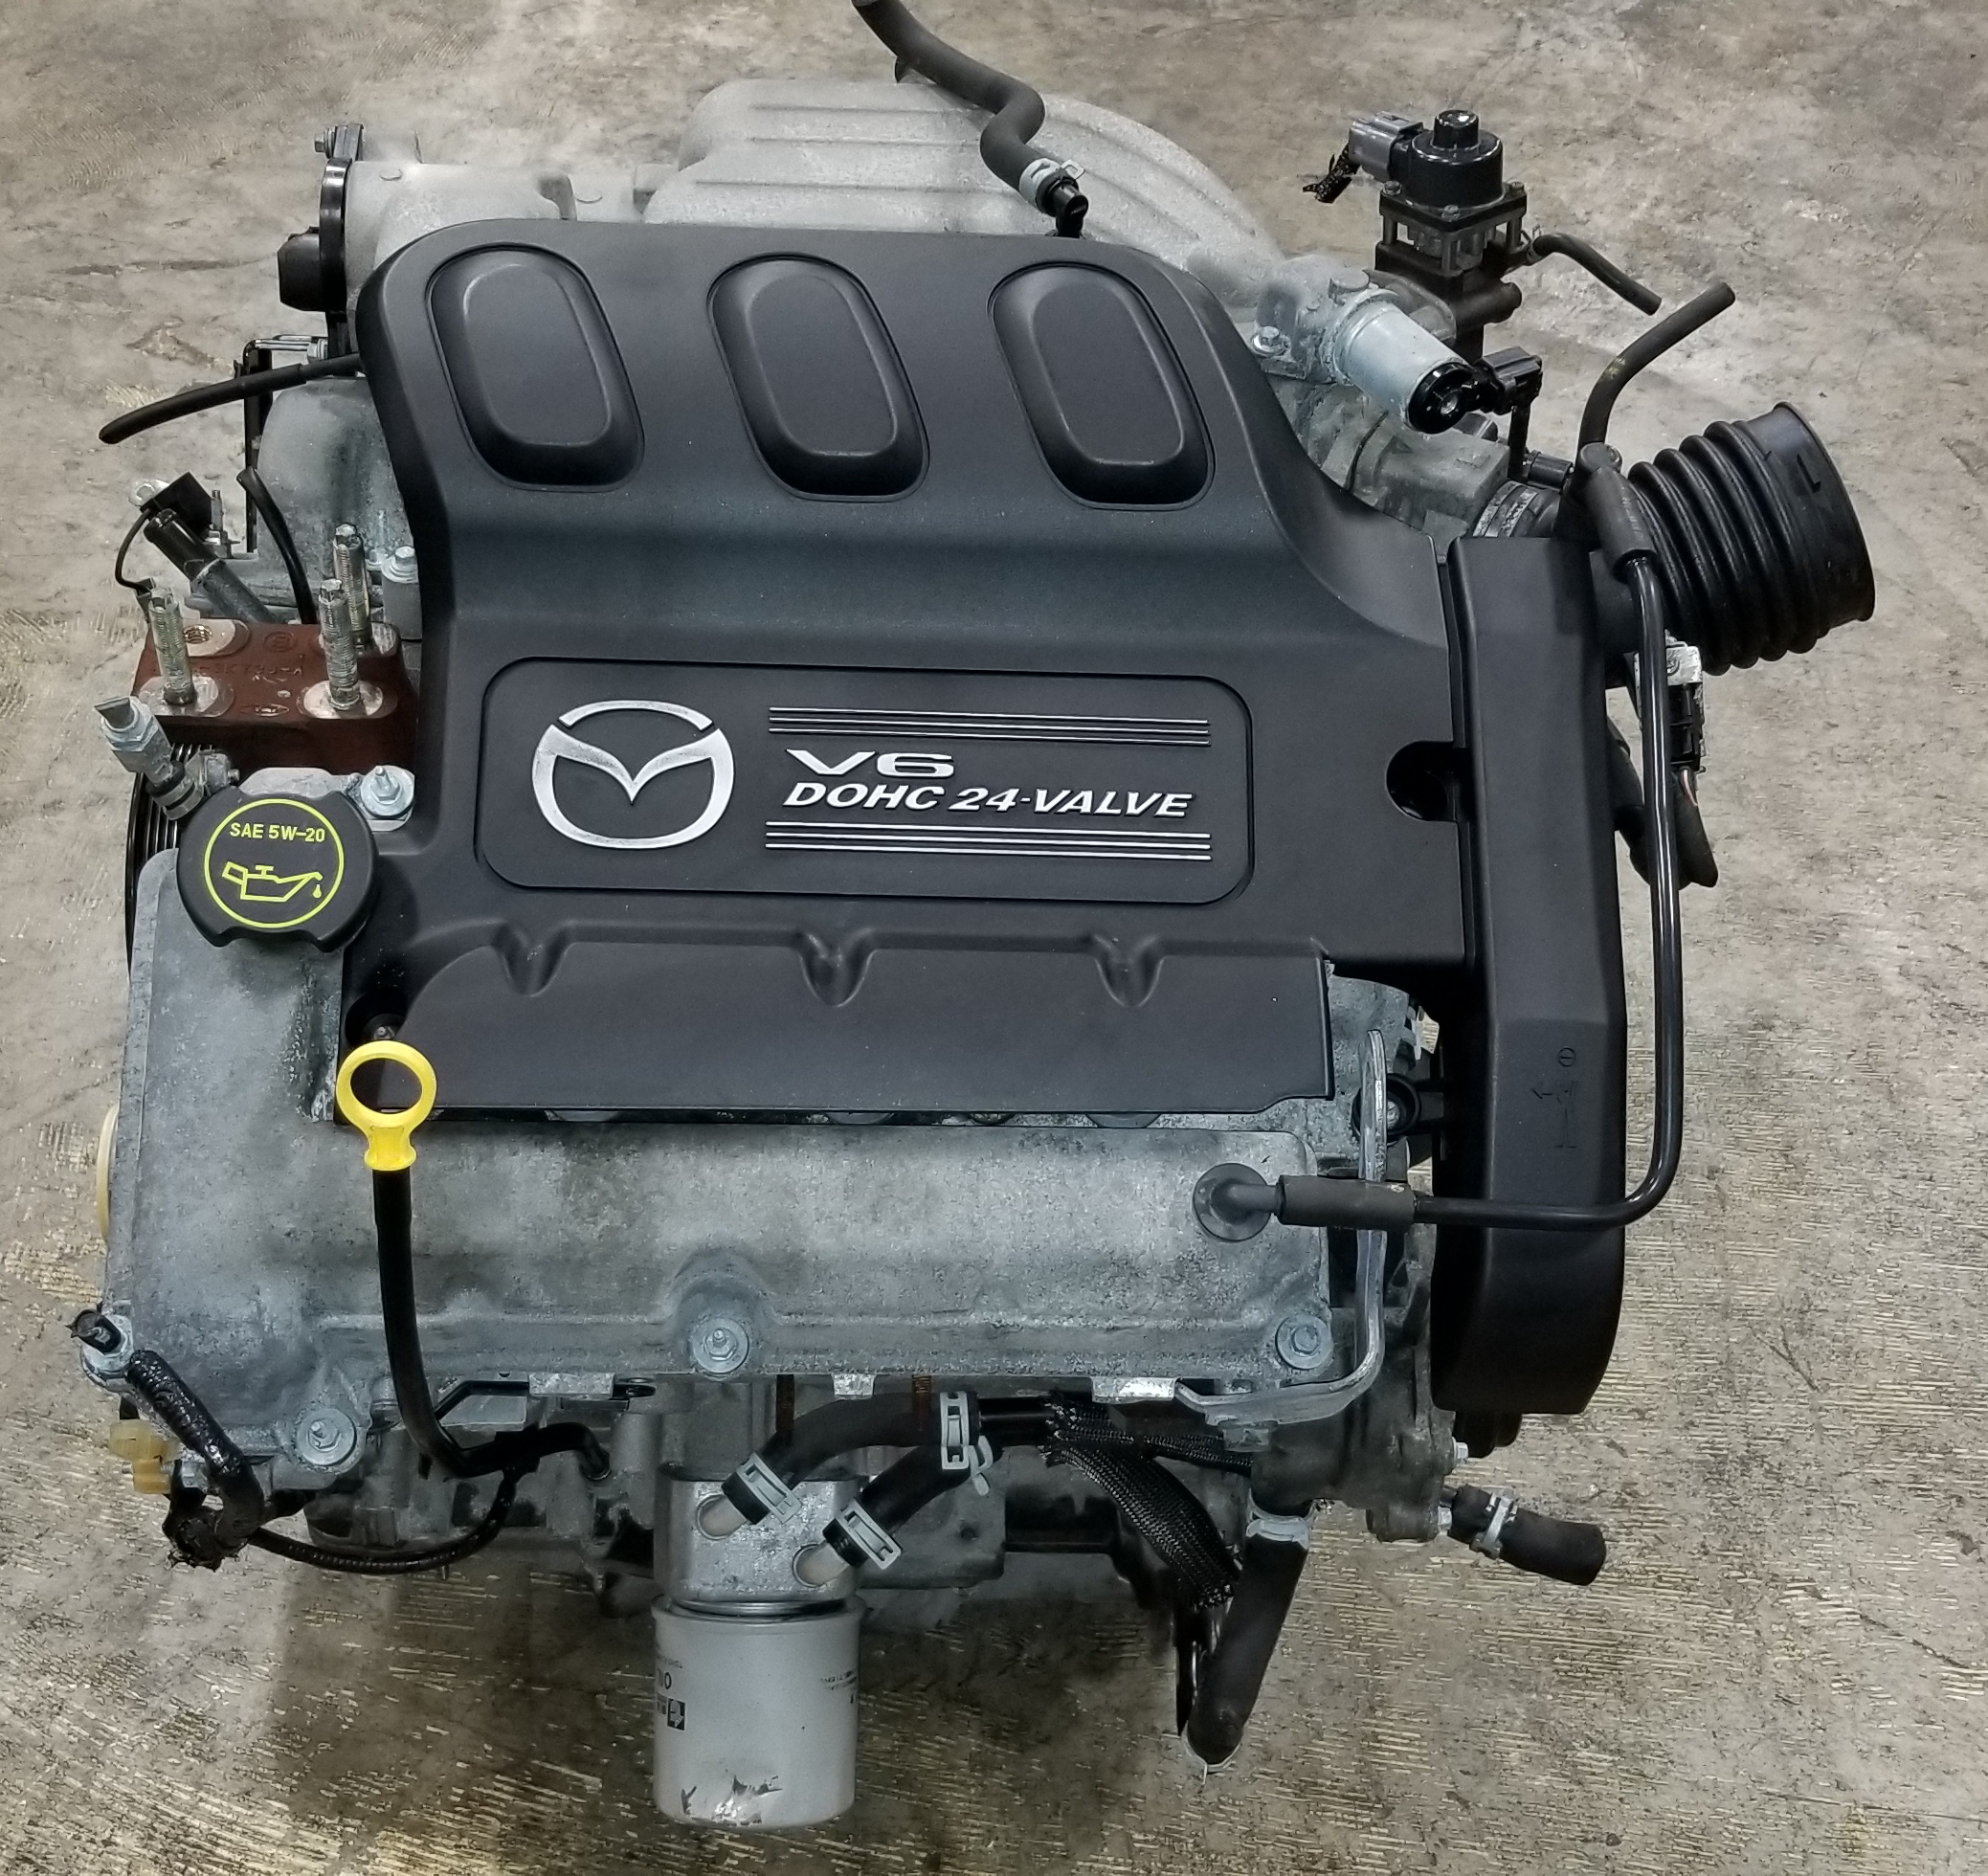 Б у двигатели россия. Mazda MPV 3.0 двигатель. Двигатель Mazda MPV 3.0 v6. Мотор Мазда трибьют 3.0. AJ-de v6 3.0 Mazda Tribute.